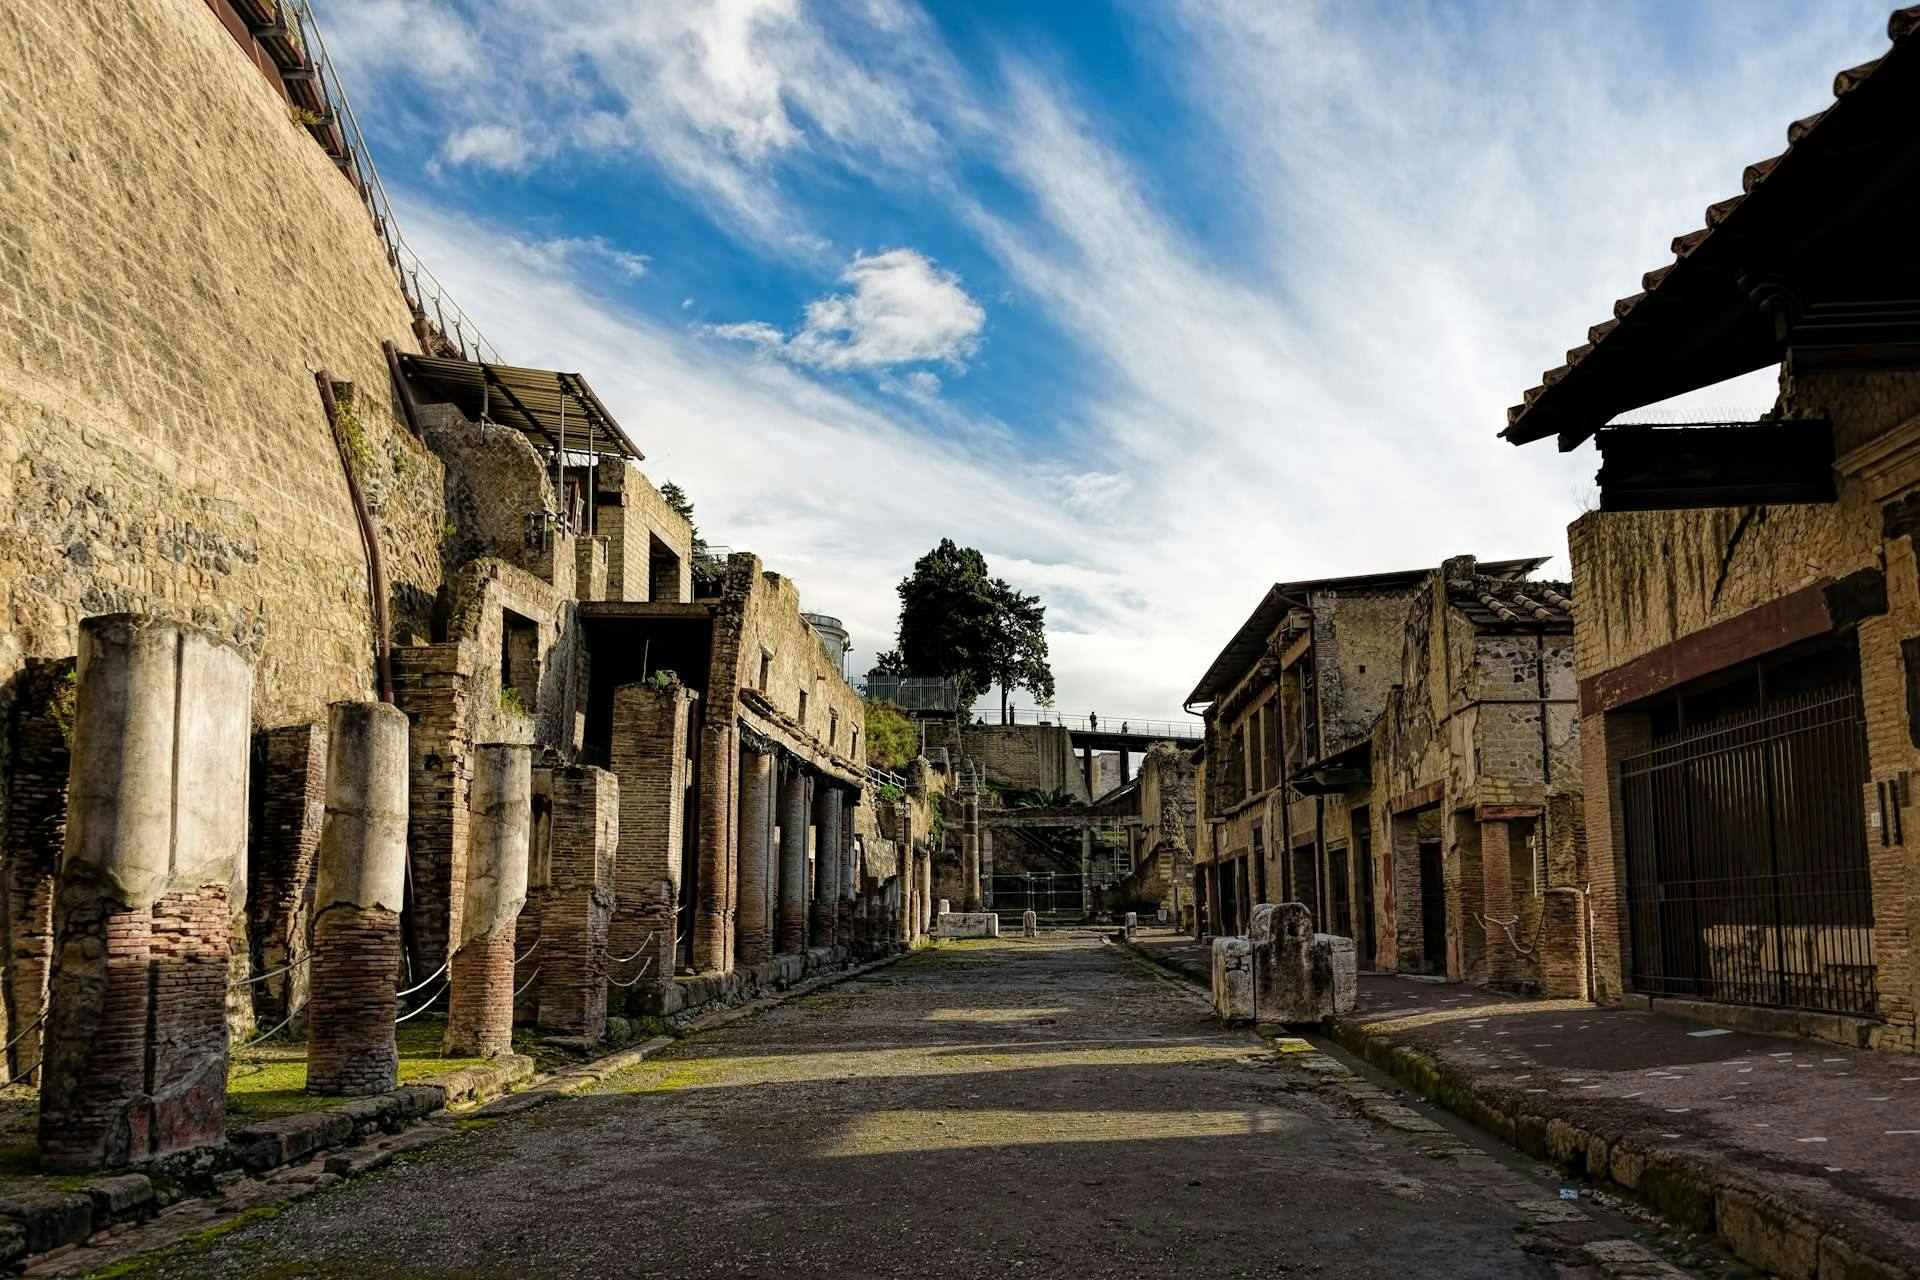 Exploring the lost city of Herculaneum.